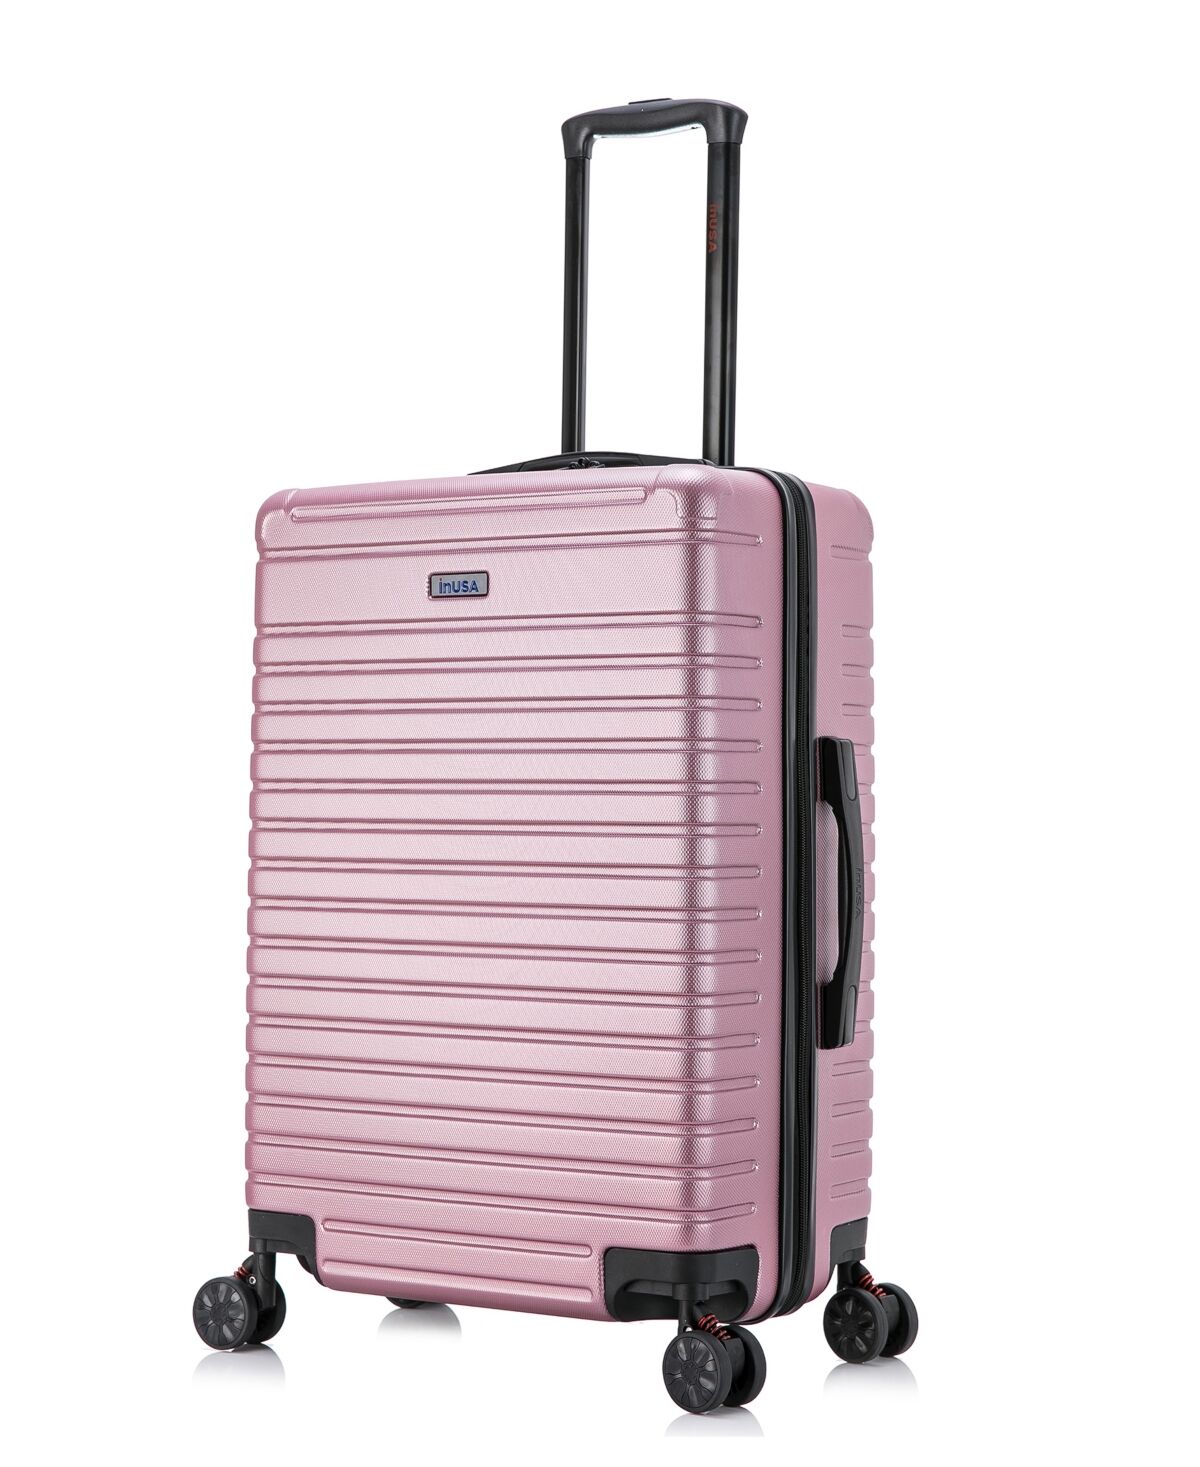 InUSA Deep Lightweight Hardside Spinner Luggage, 24